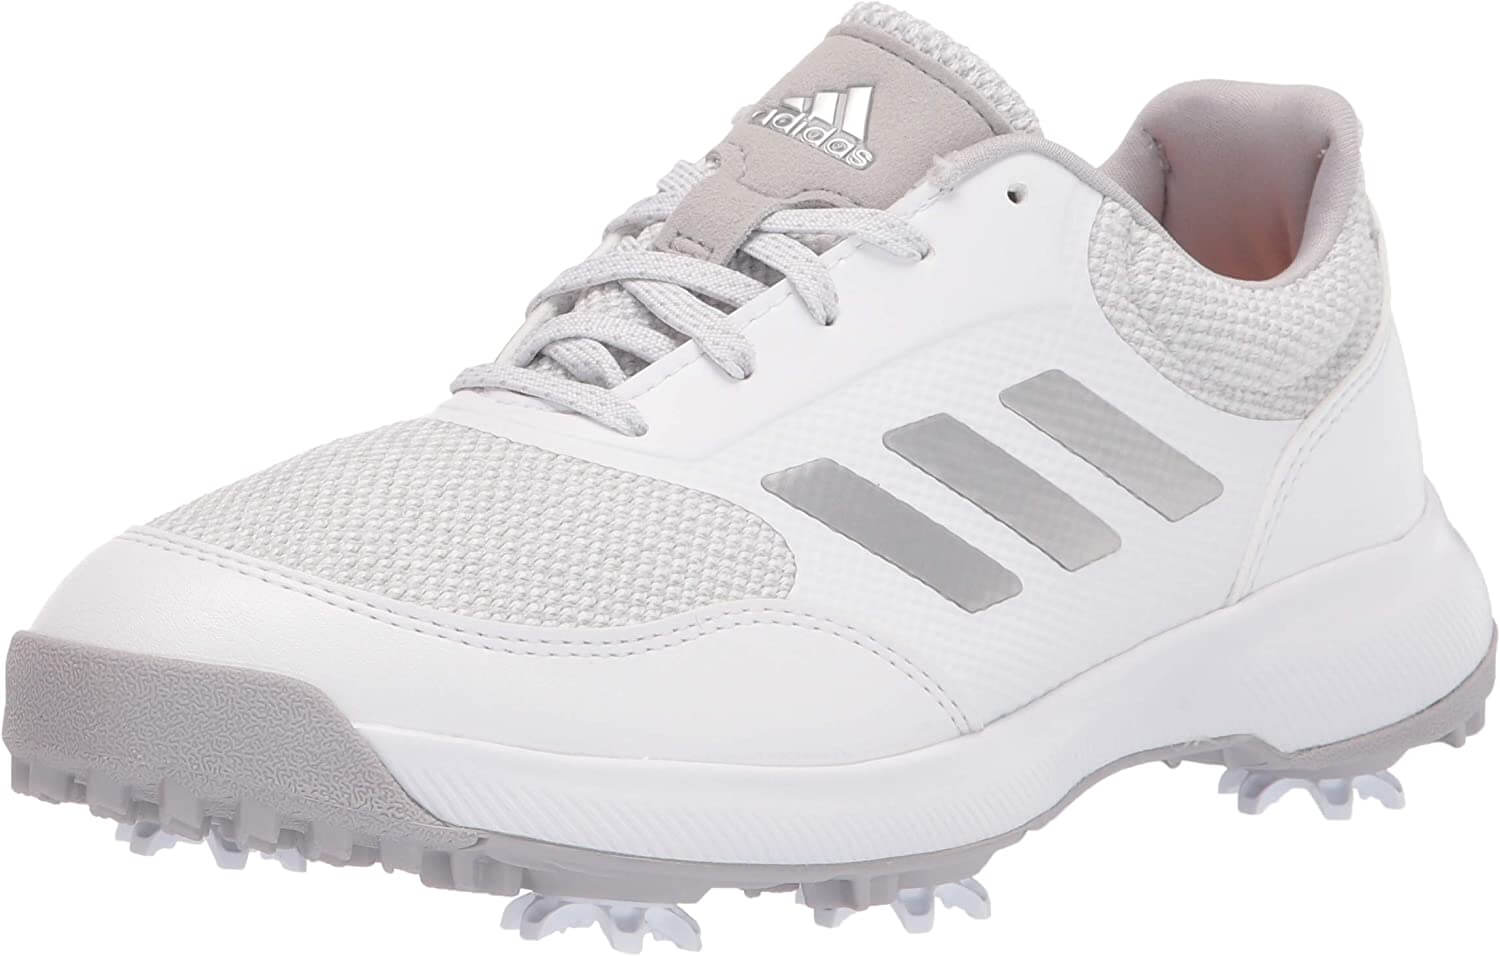 Adidas Golf Shoes Womens W Tech Response